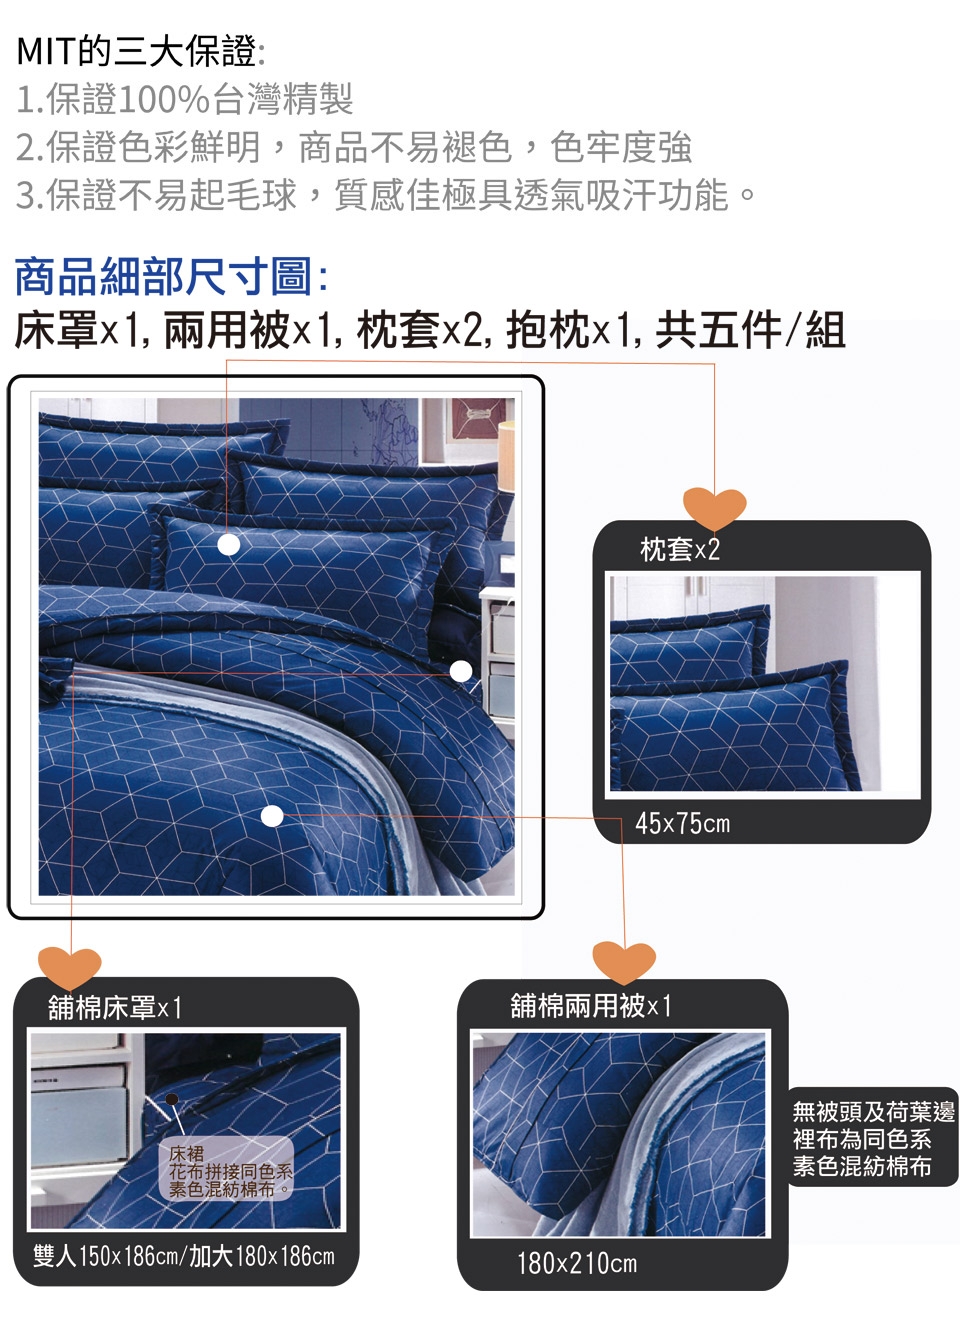 Carolan 藍海加大五件式純棉床罩組(台灣製)